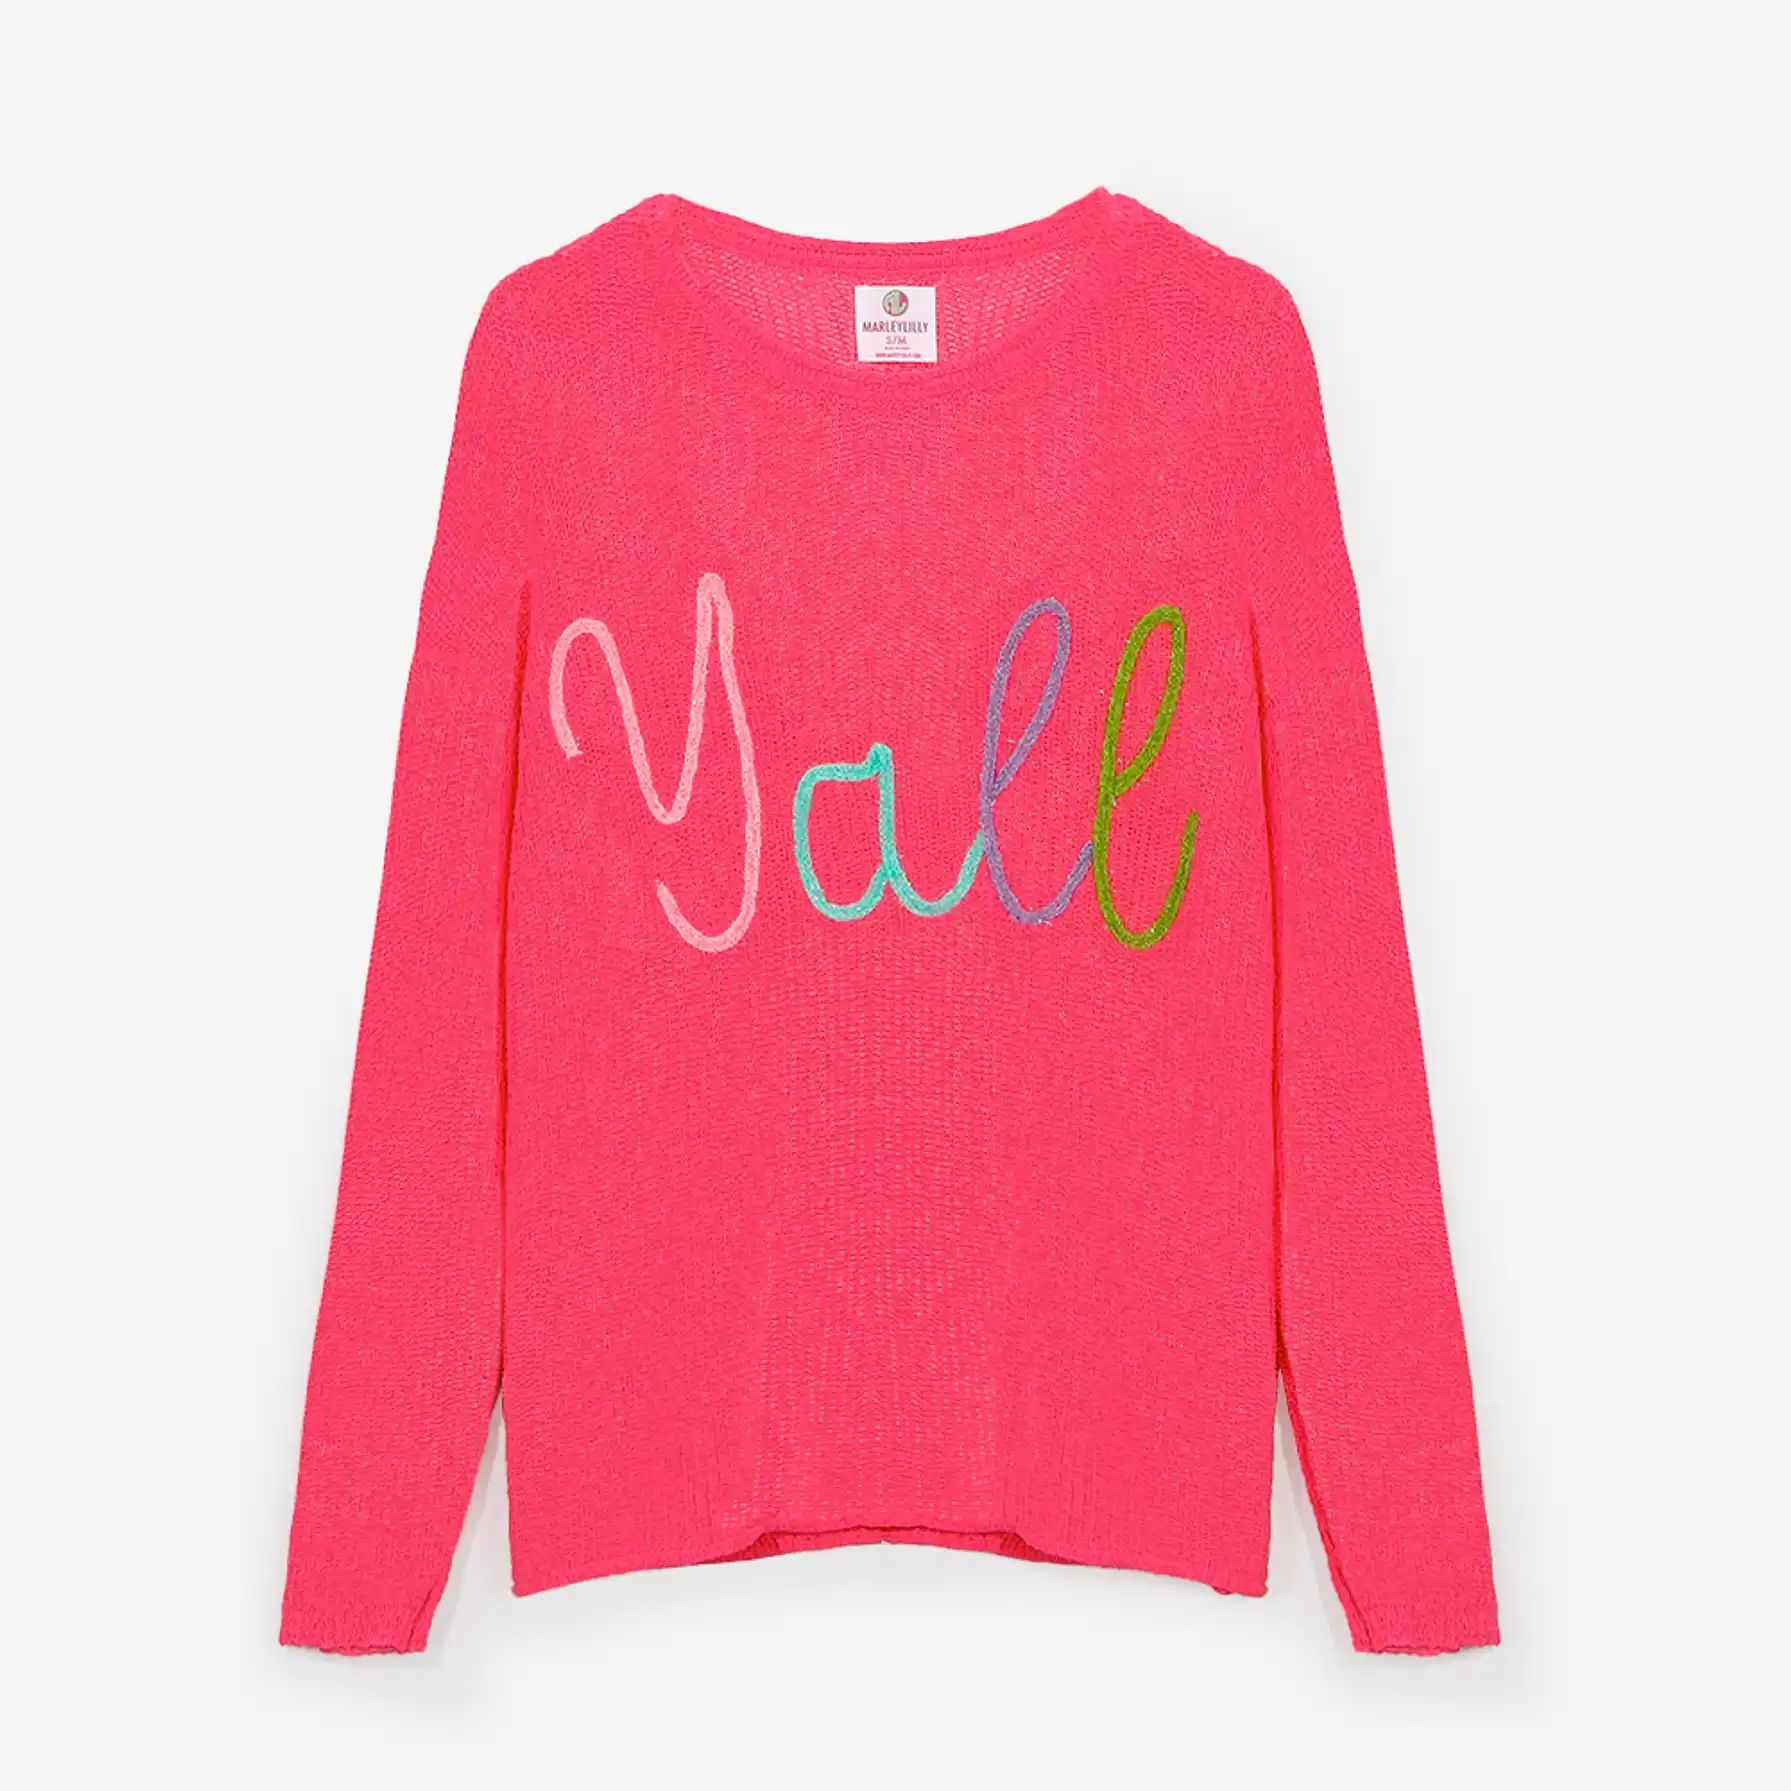 Yall Sweater | Marleylilly